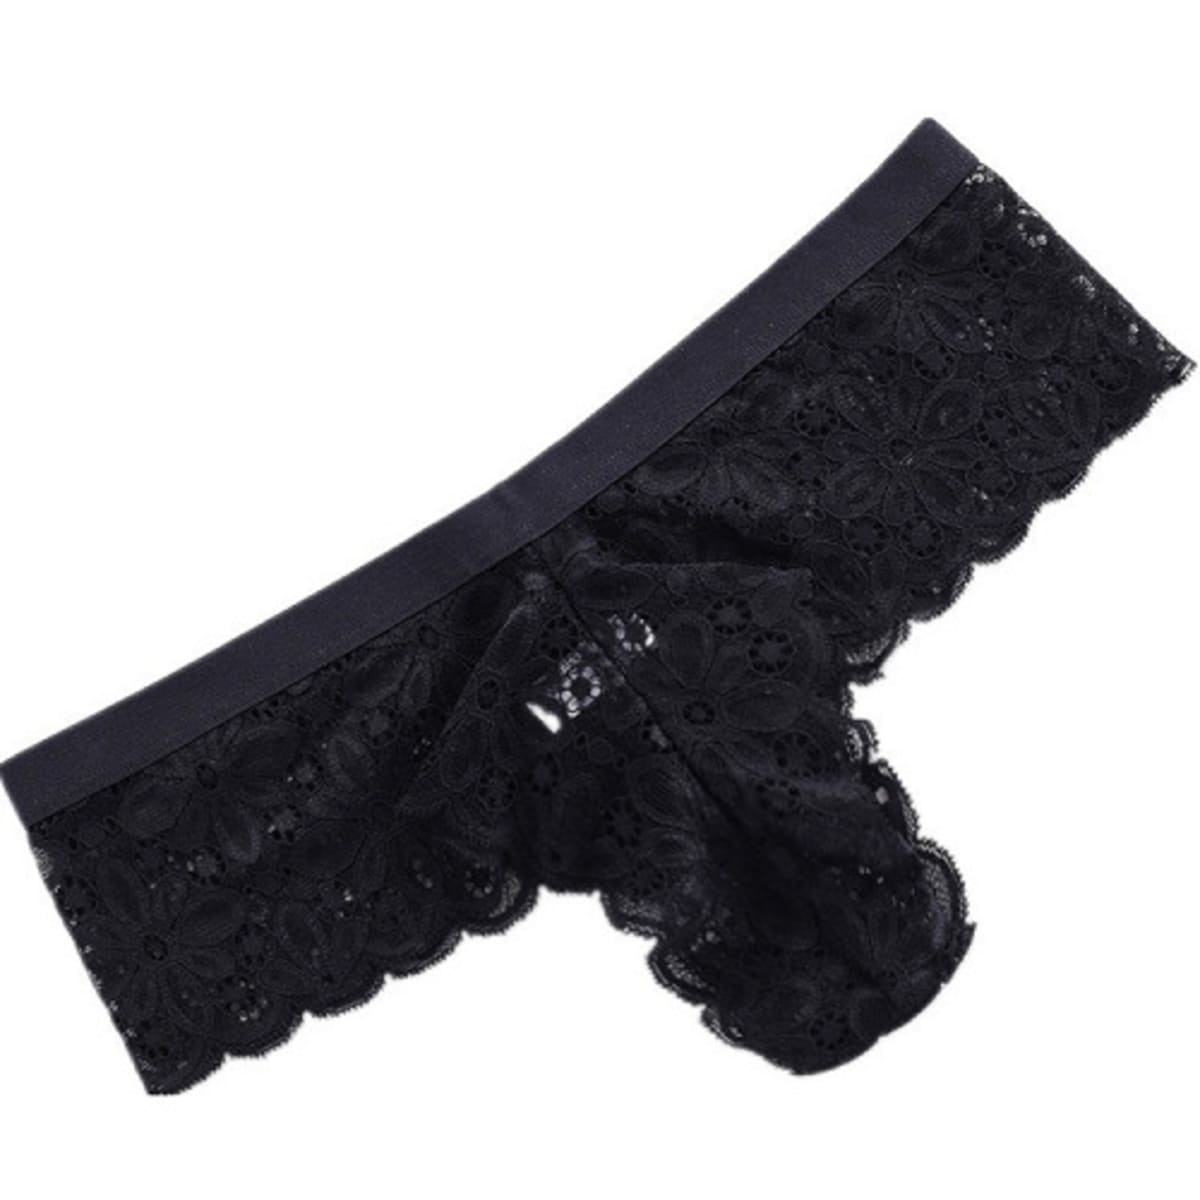 Women's Cotton Panties-6 Pieces